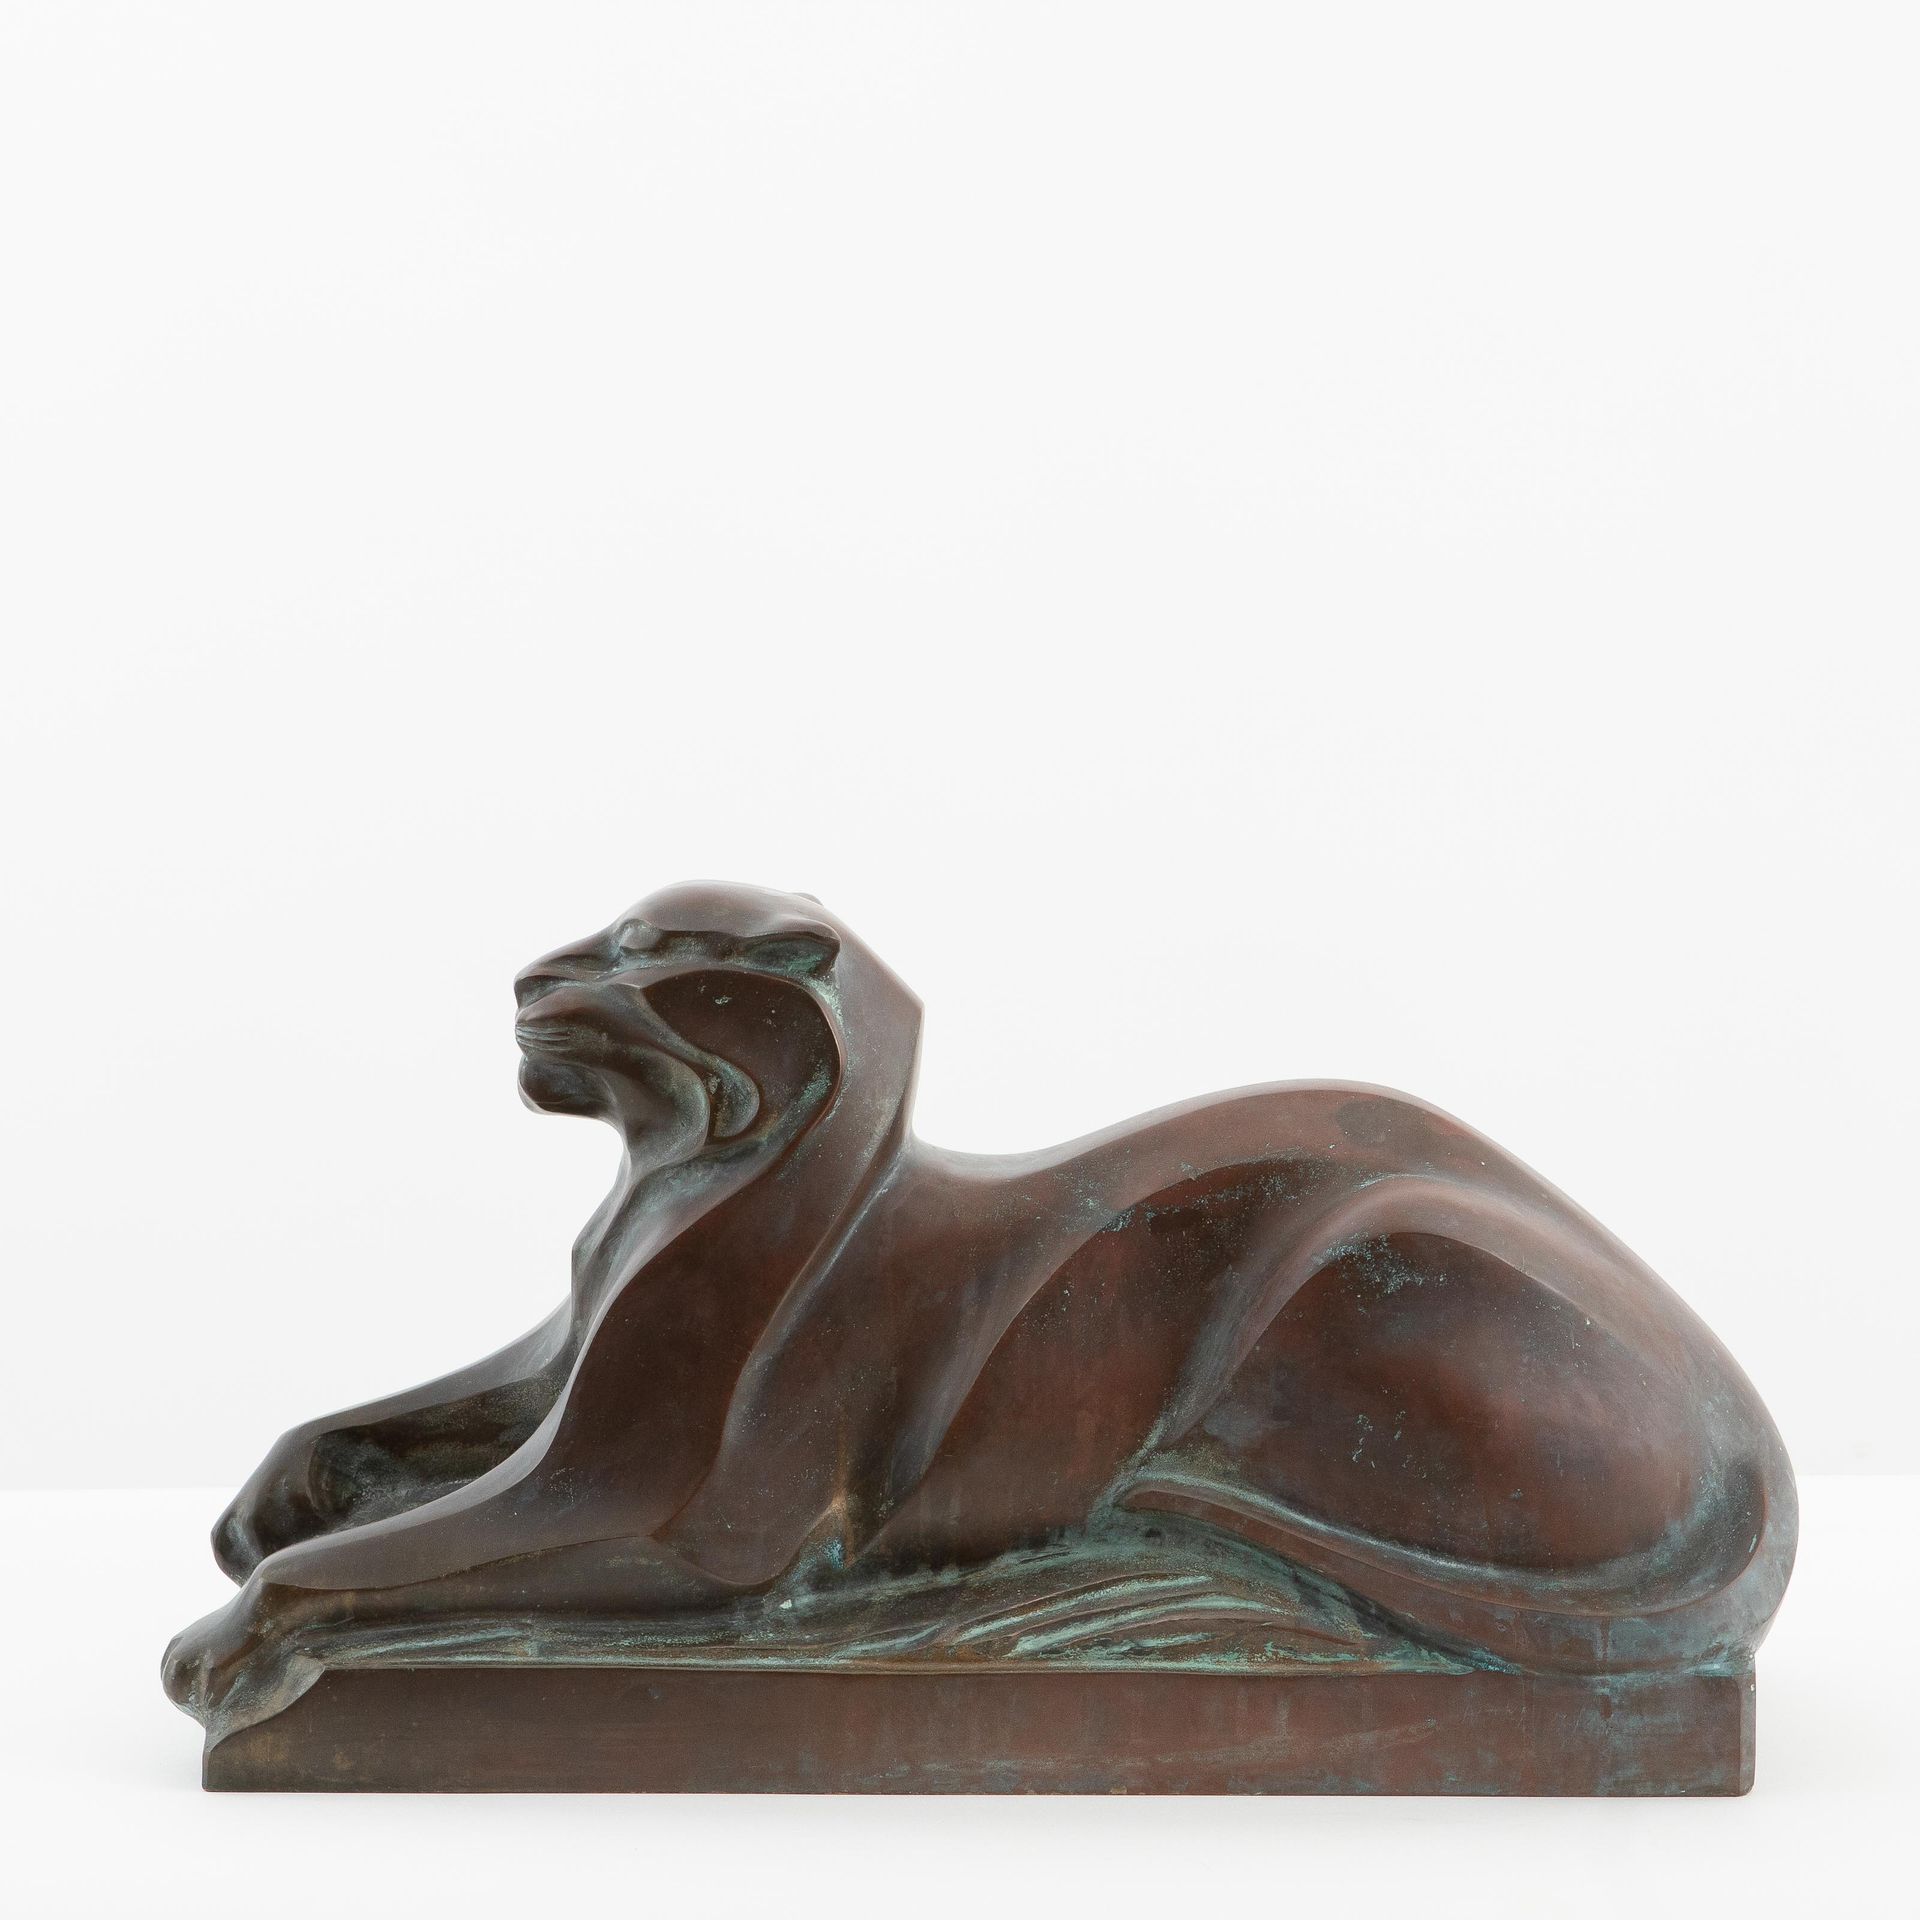 LOUIS NOËL (1938-2014) 躺着的豹子。

青铜，红褐色的铜锈。

无符号。

30 x 54 x 19 厘米